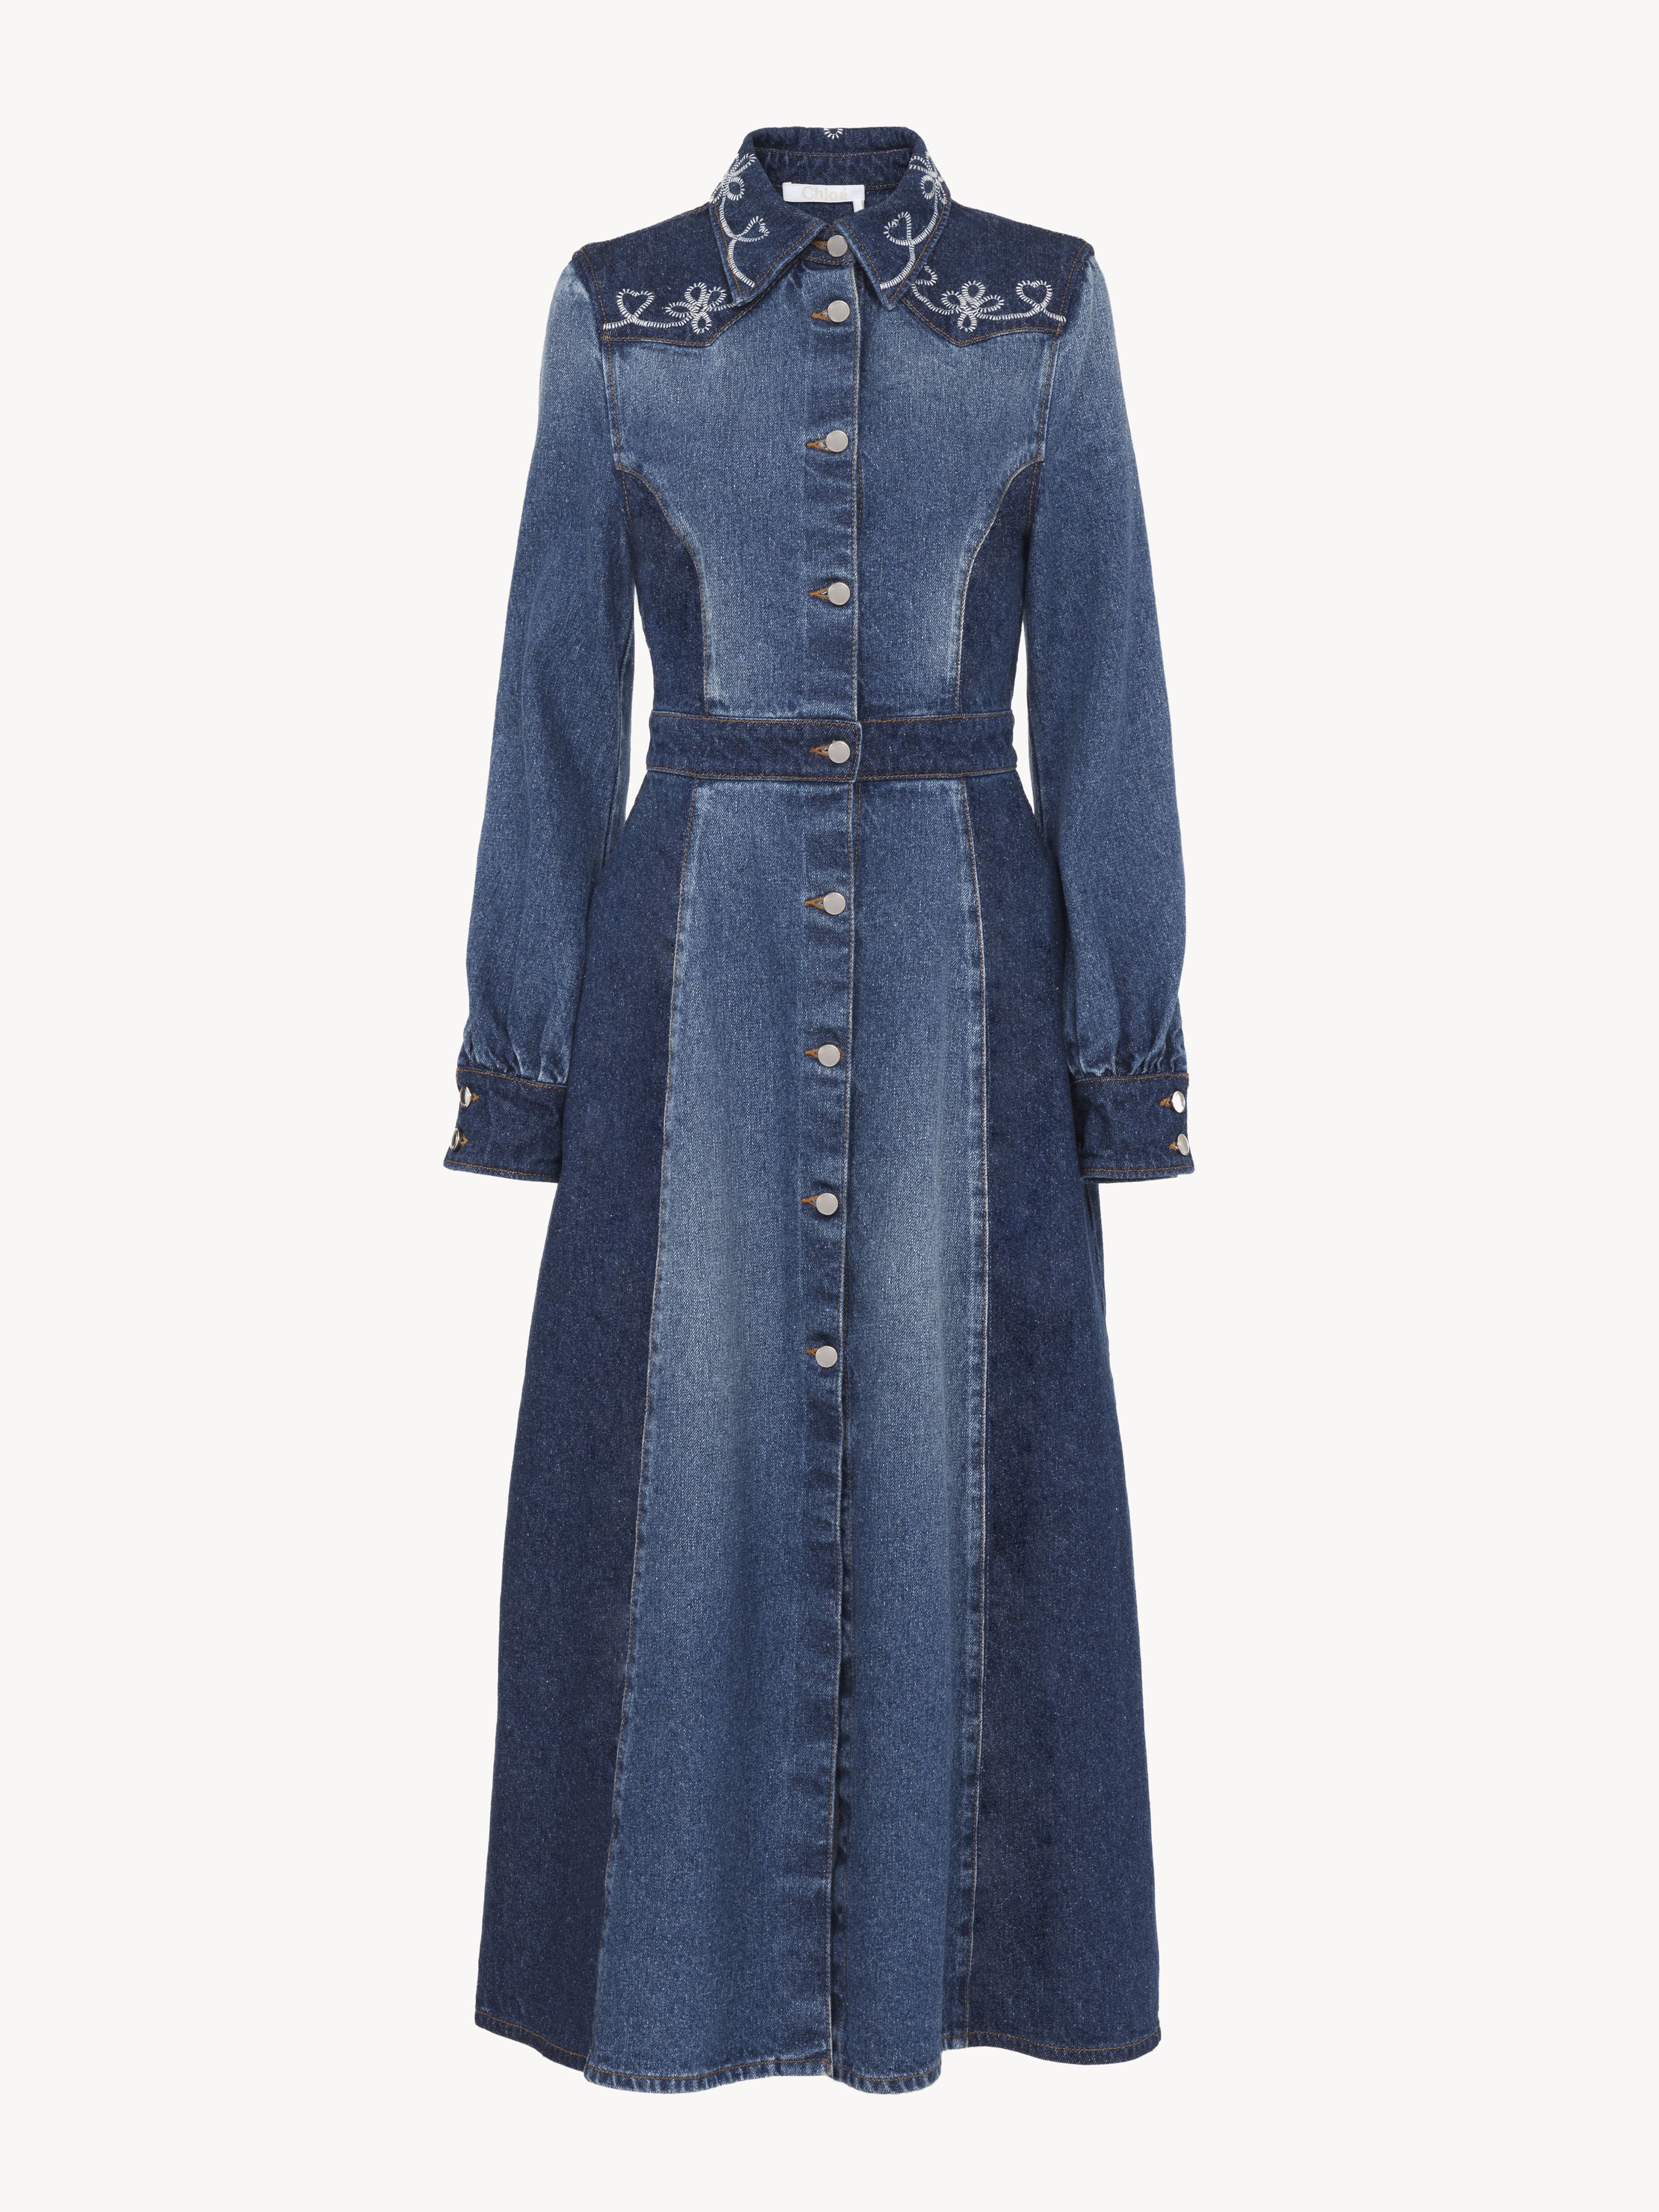 Chloé Embroidered Denim Shirt Dress Blue Size 6 100% Cotton